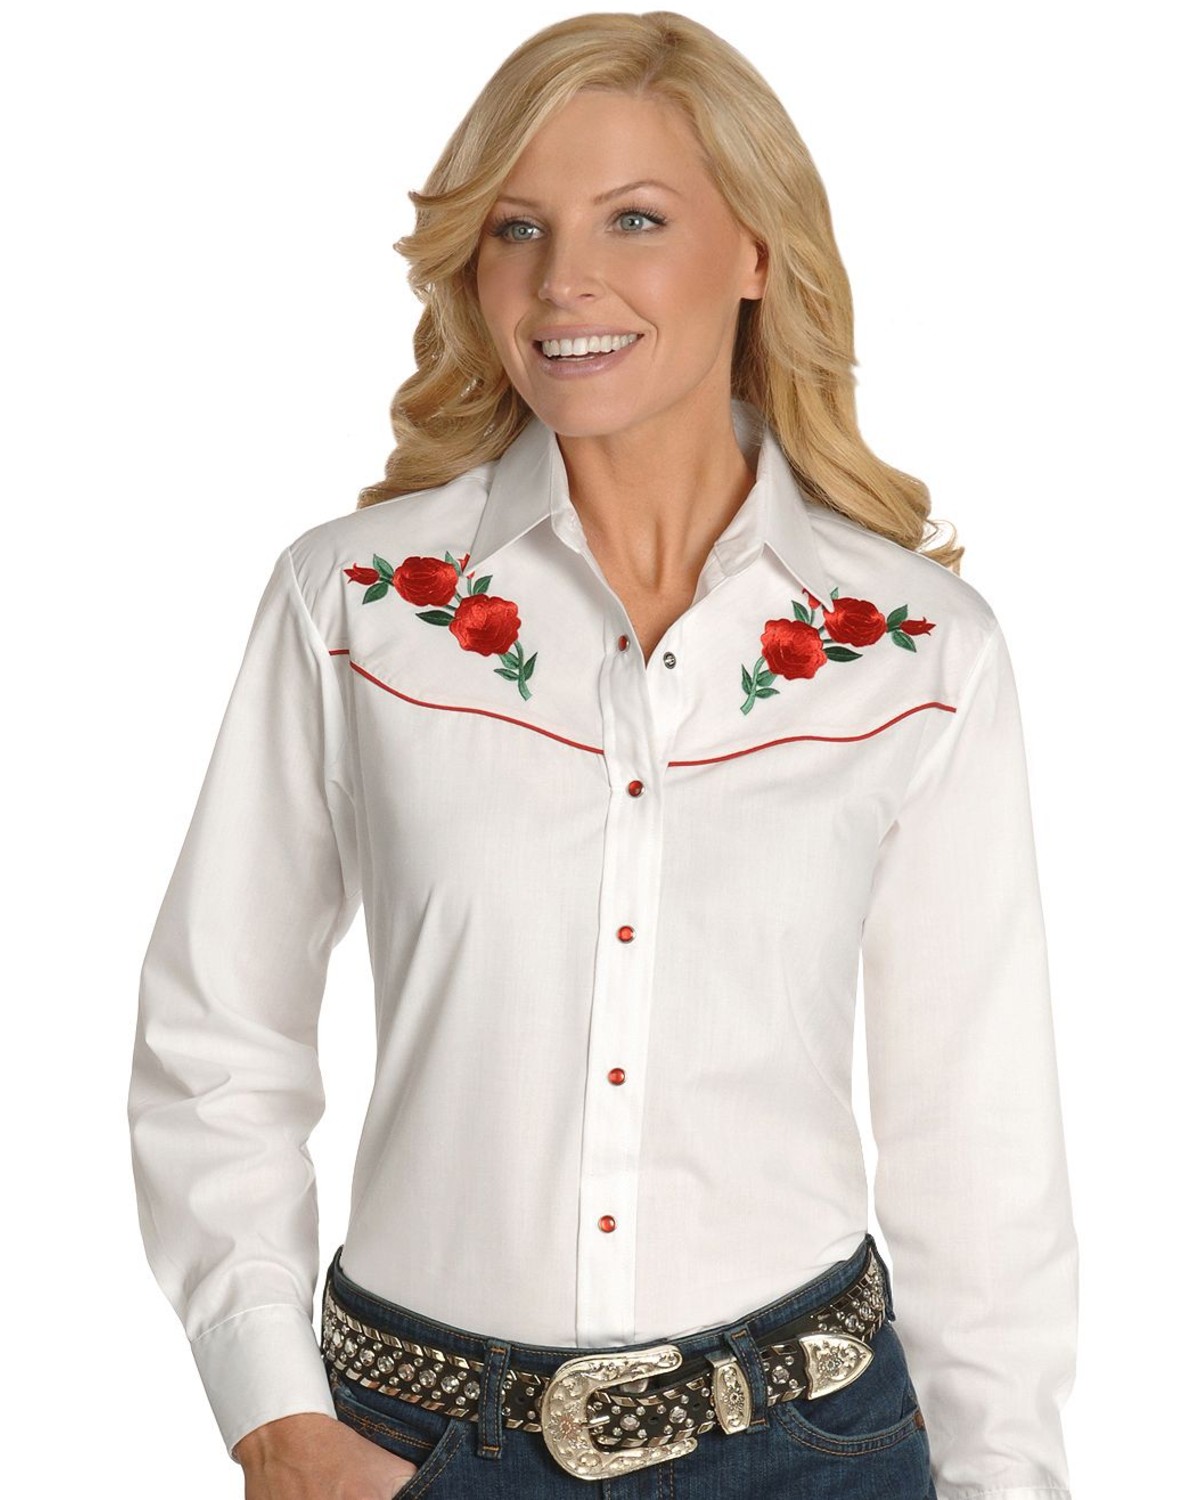 cowboy attire for female images